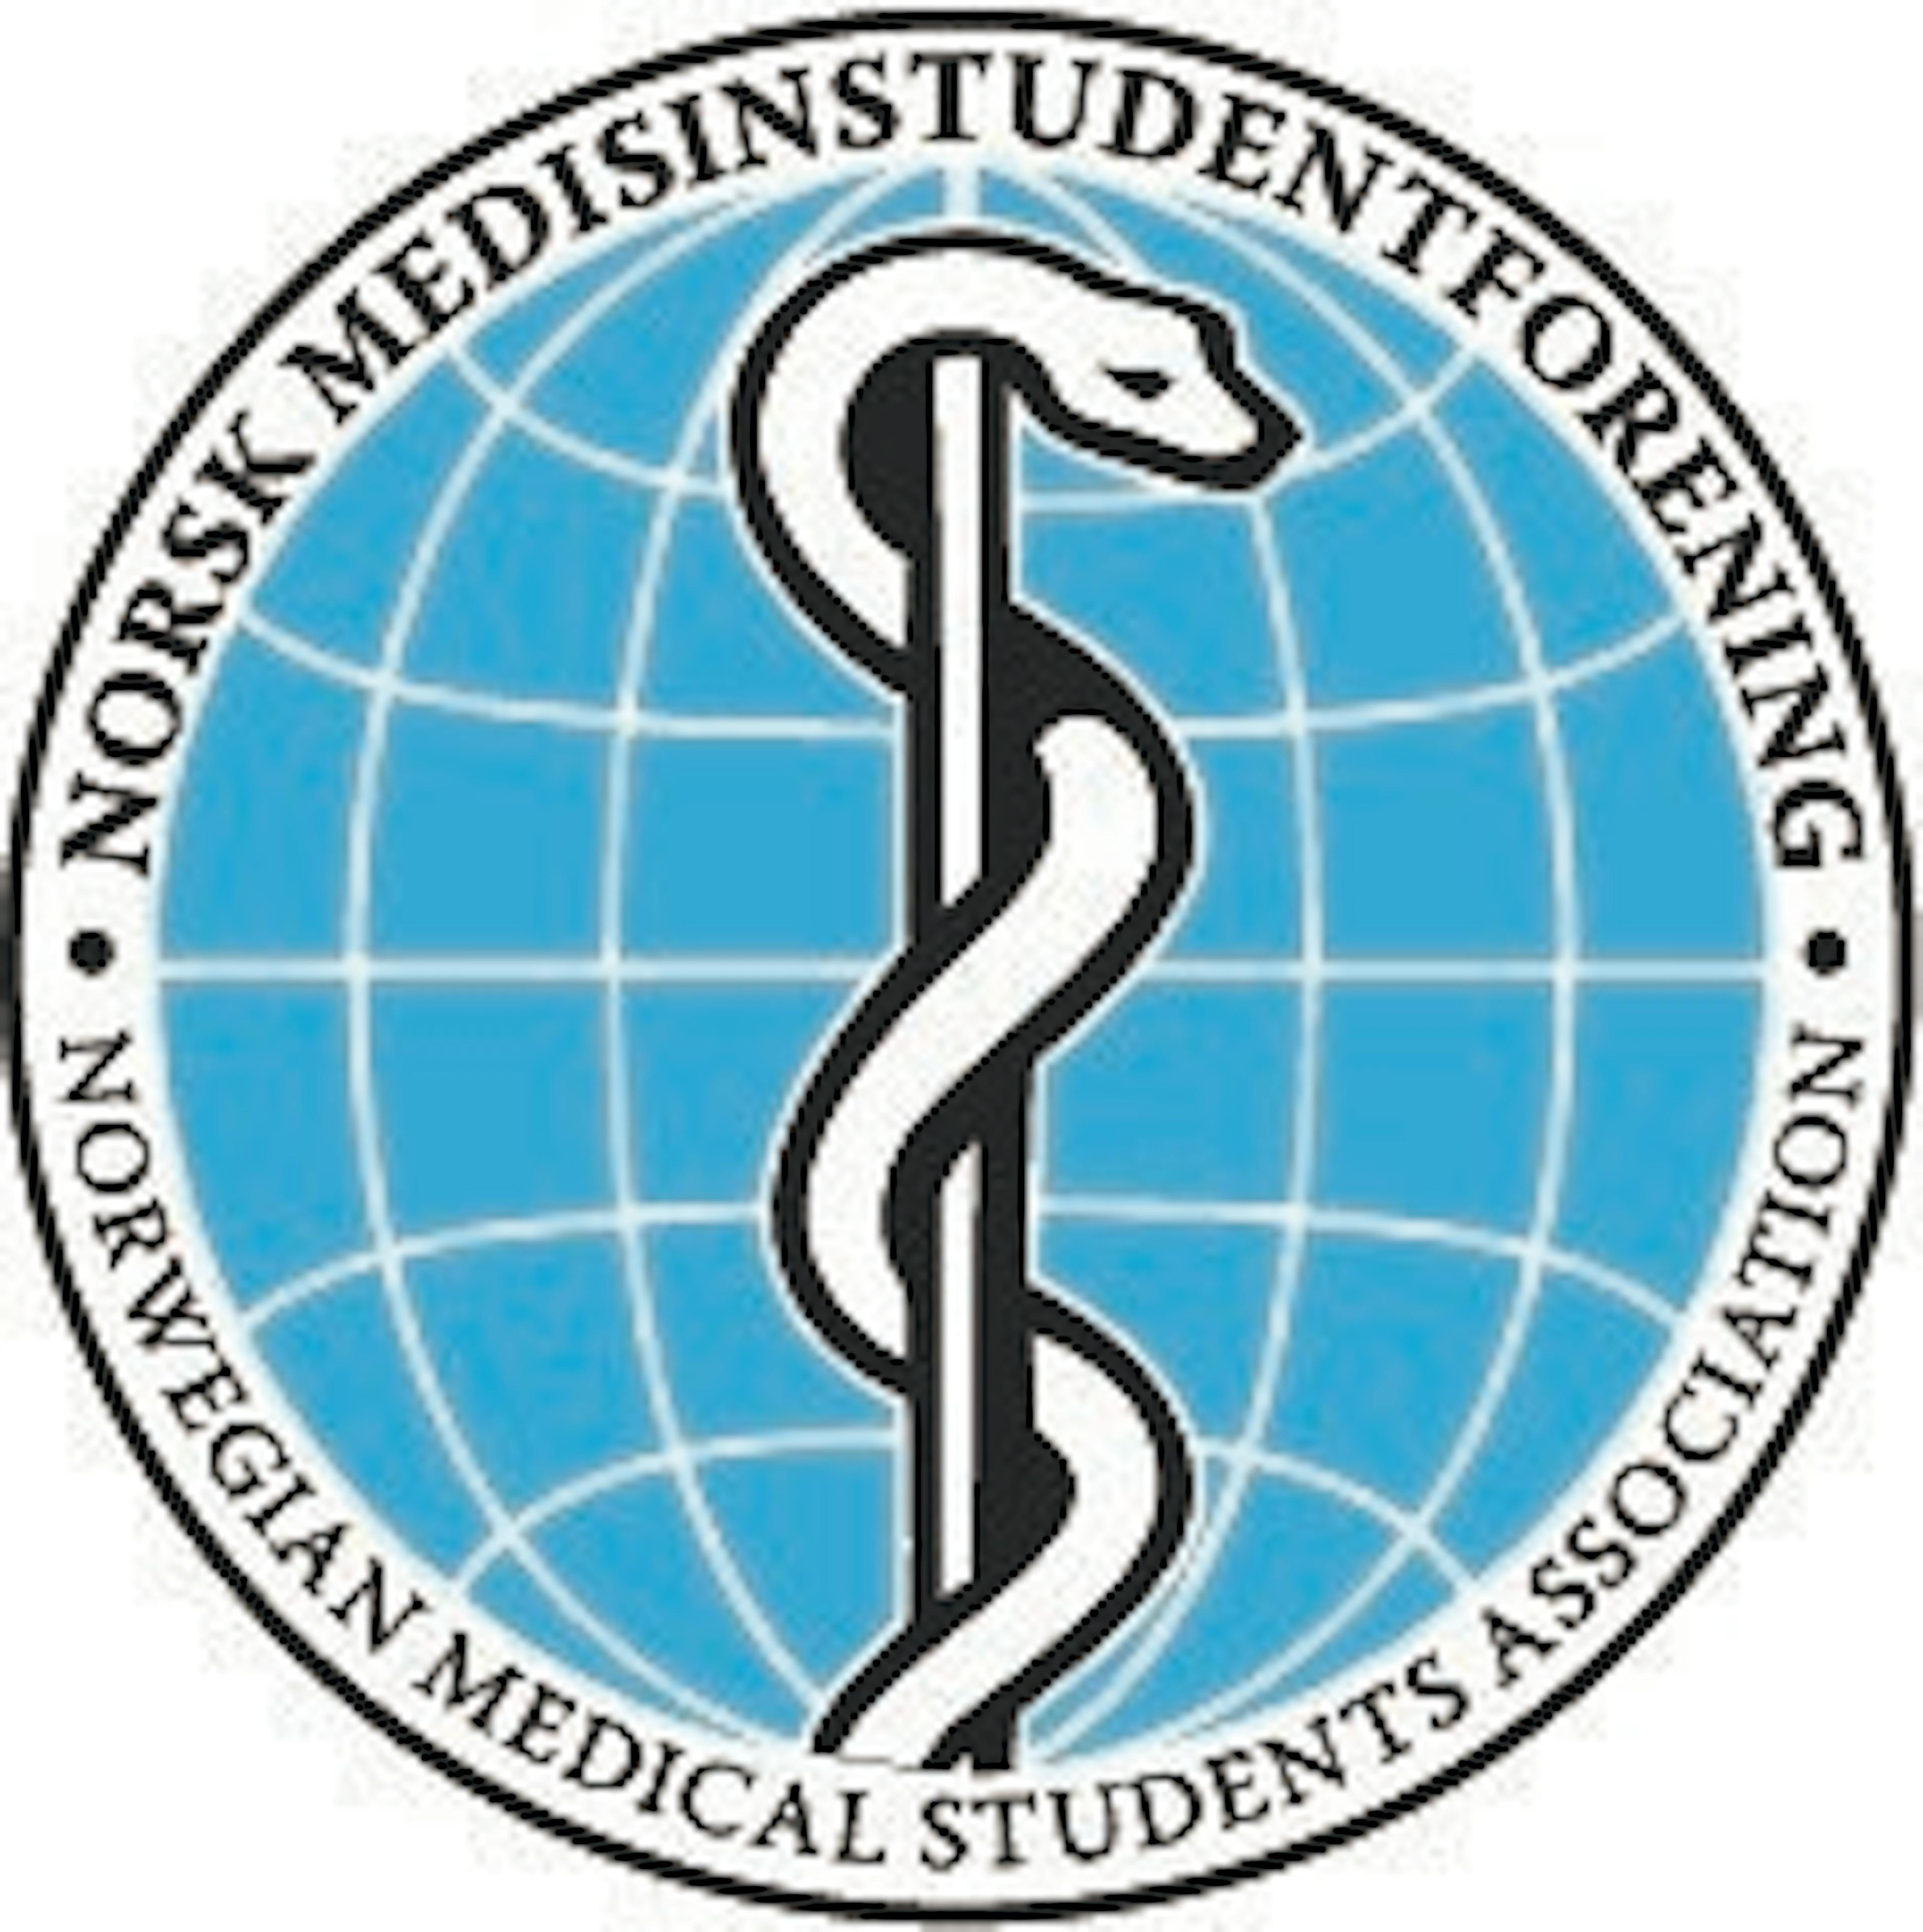 Norsk medisinstudentforening Tromso